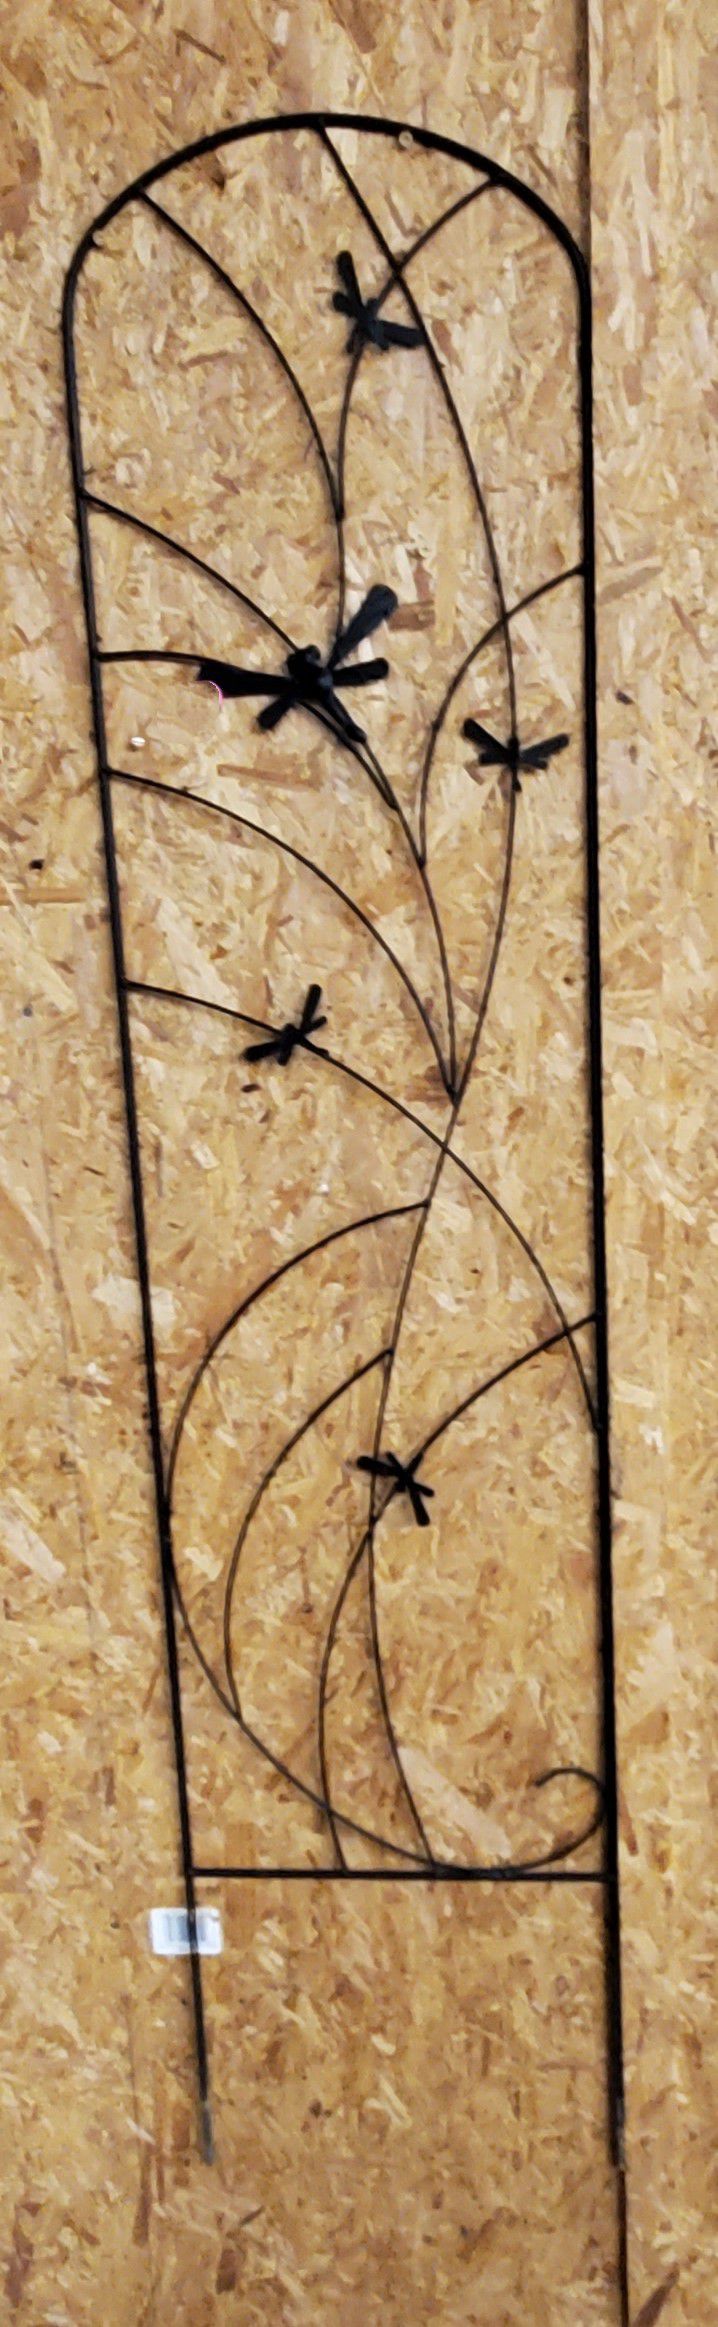 Dragonfly Delight Steel Decorative Garden Trellis